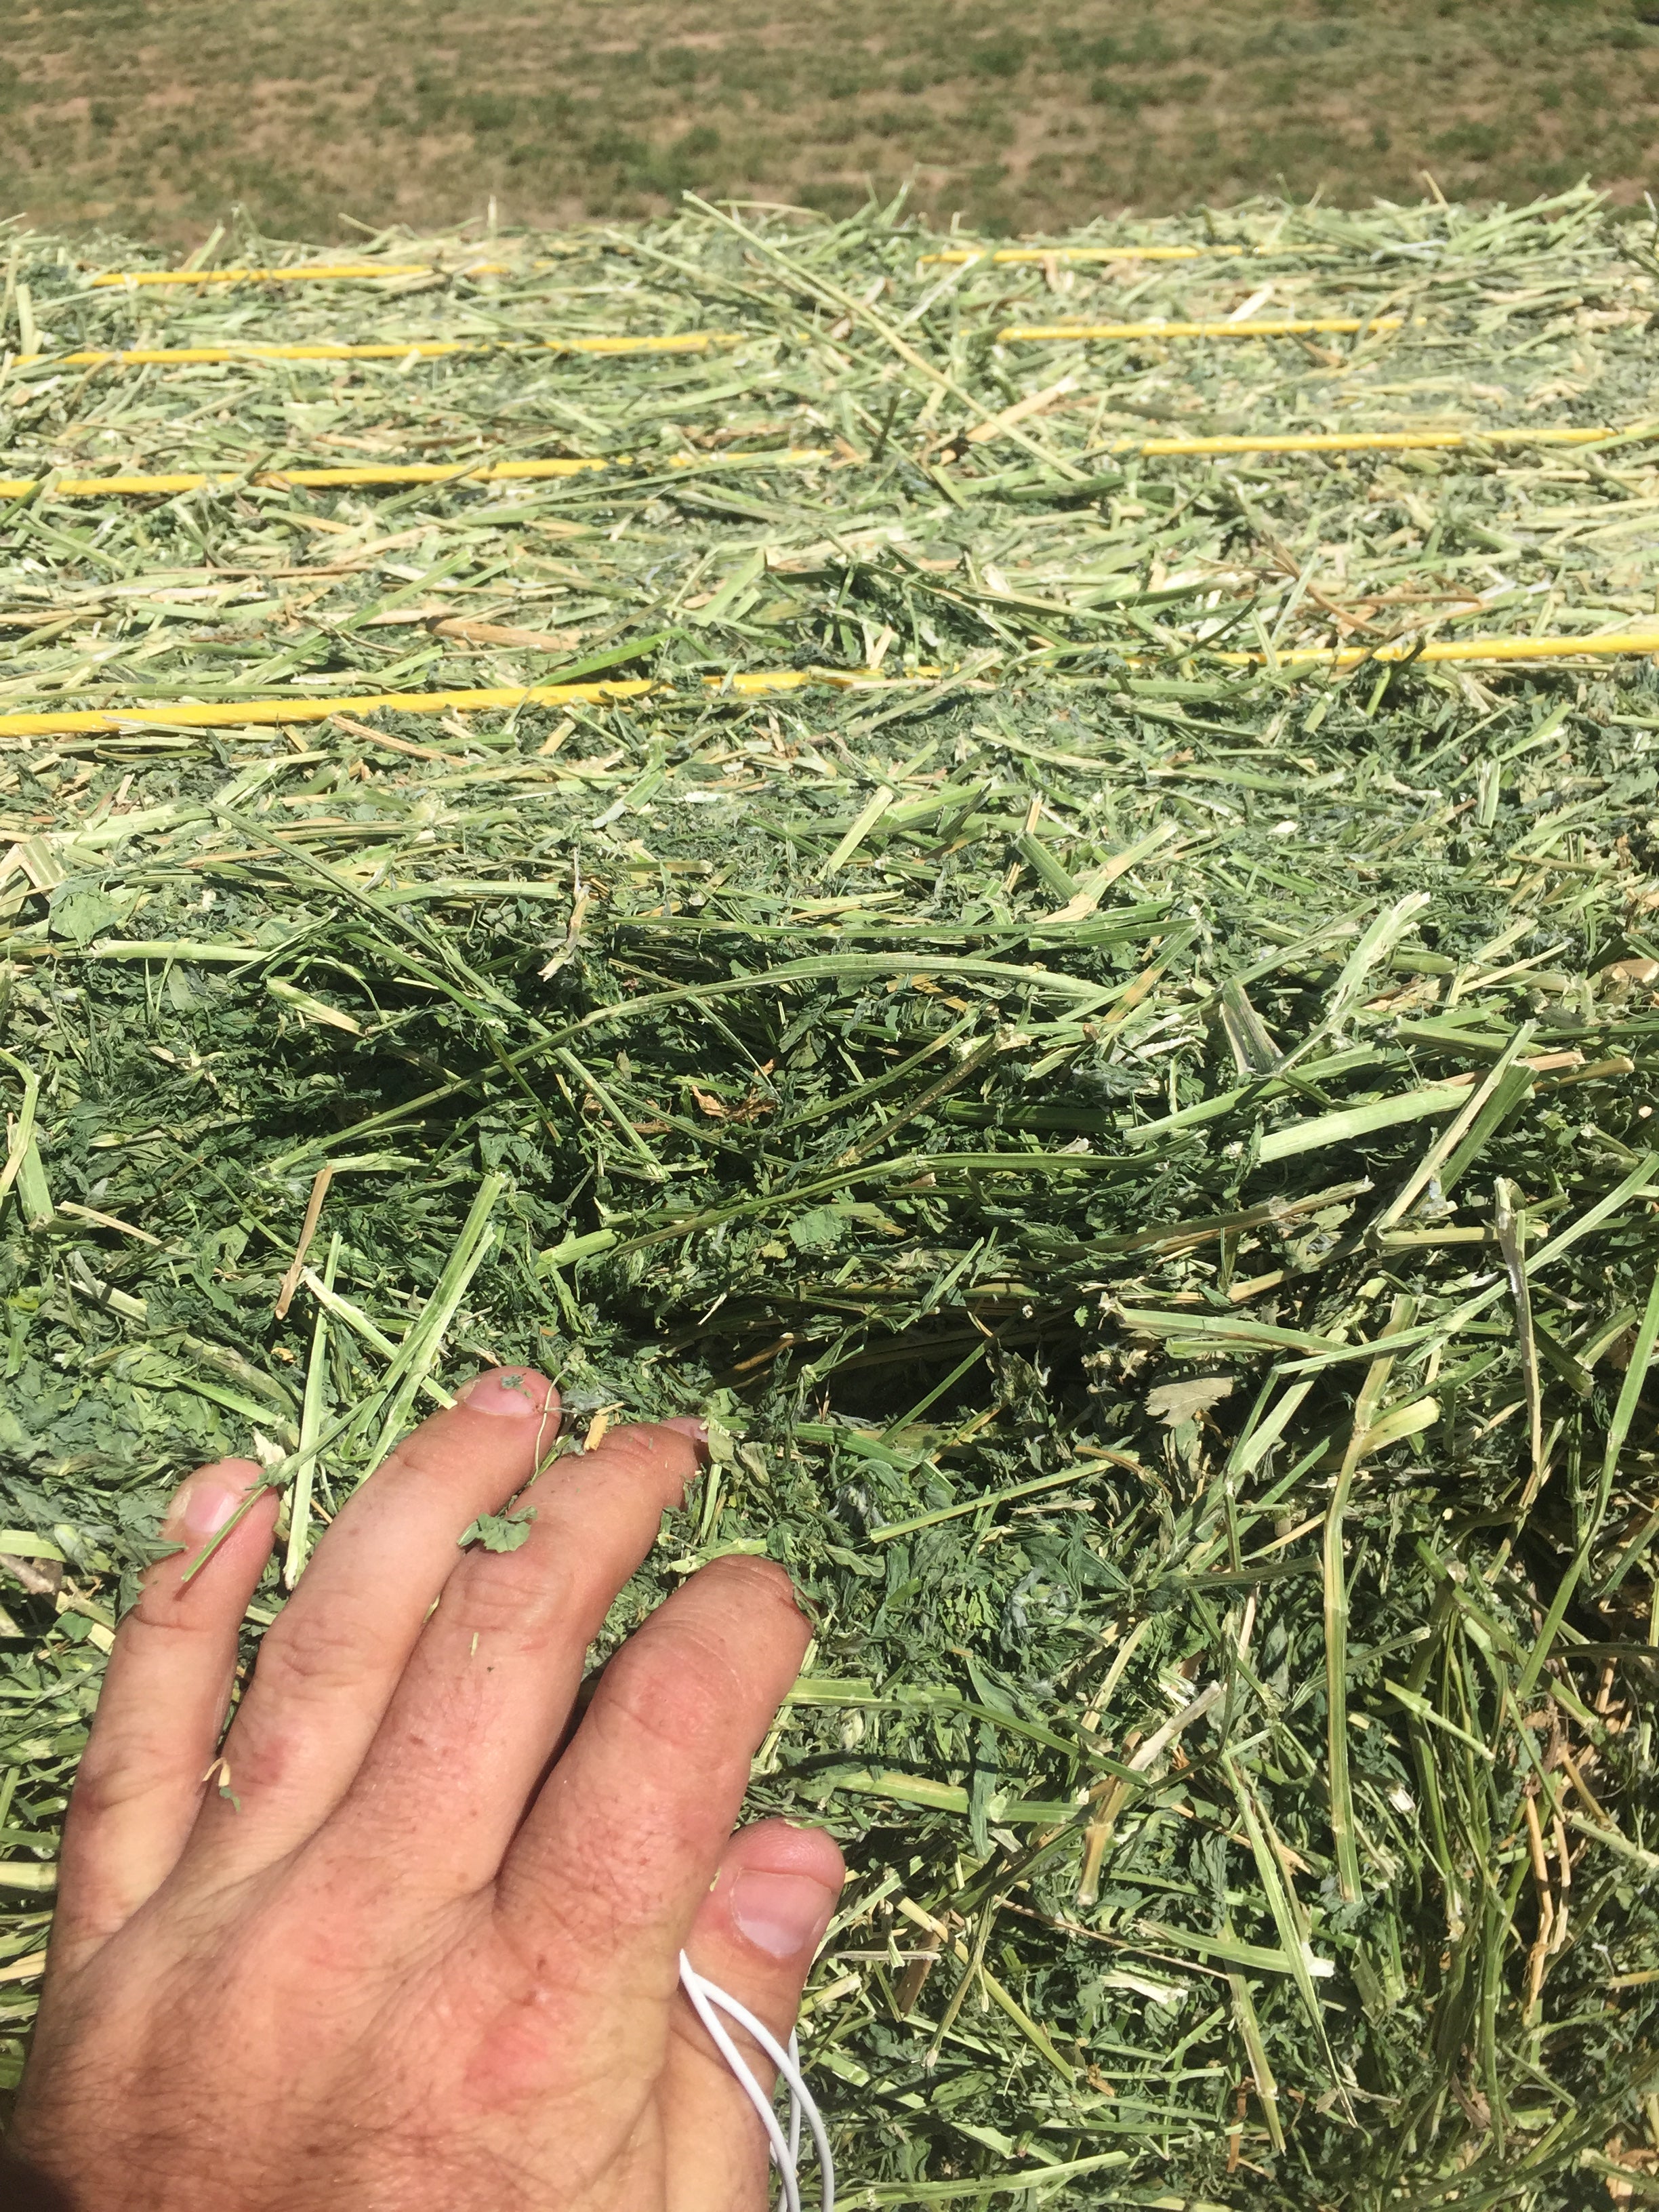 can dogs eat alfalfa hay